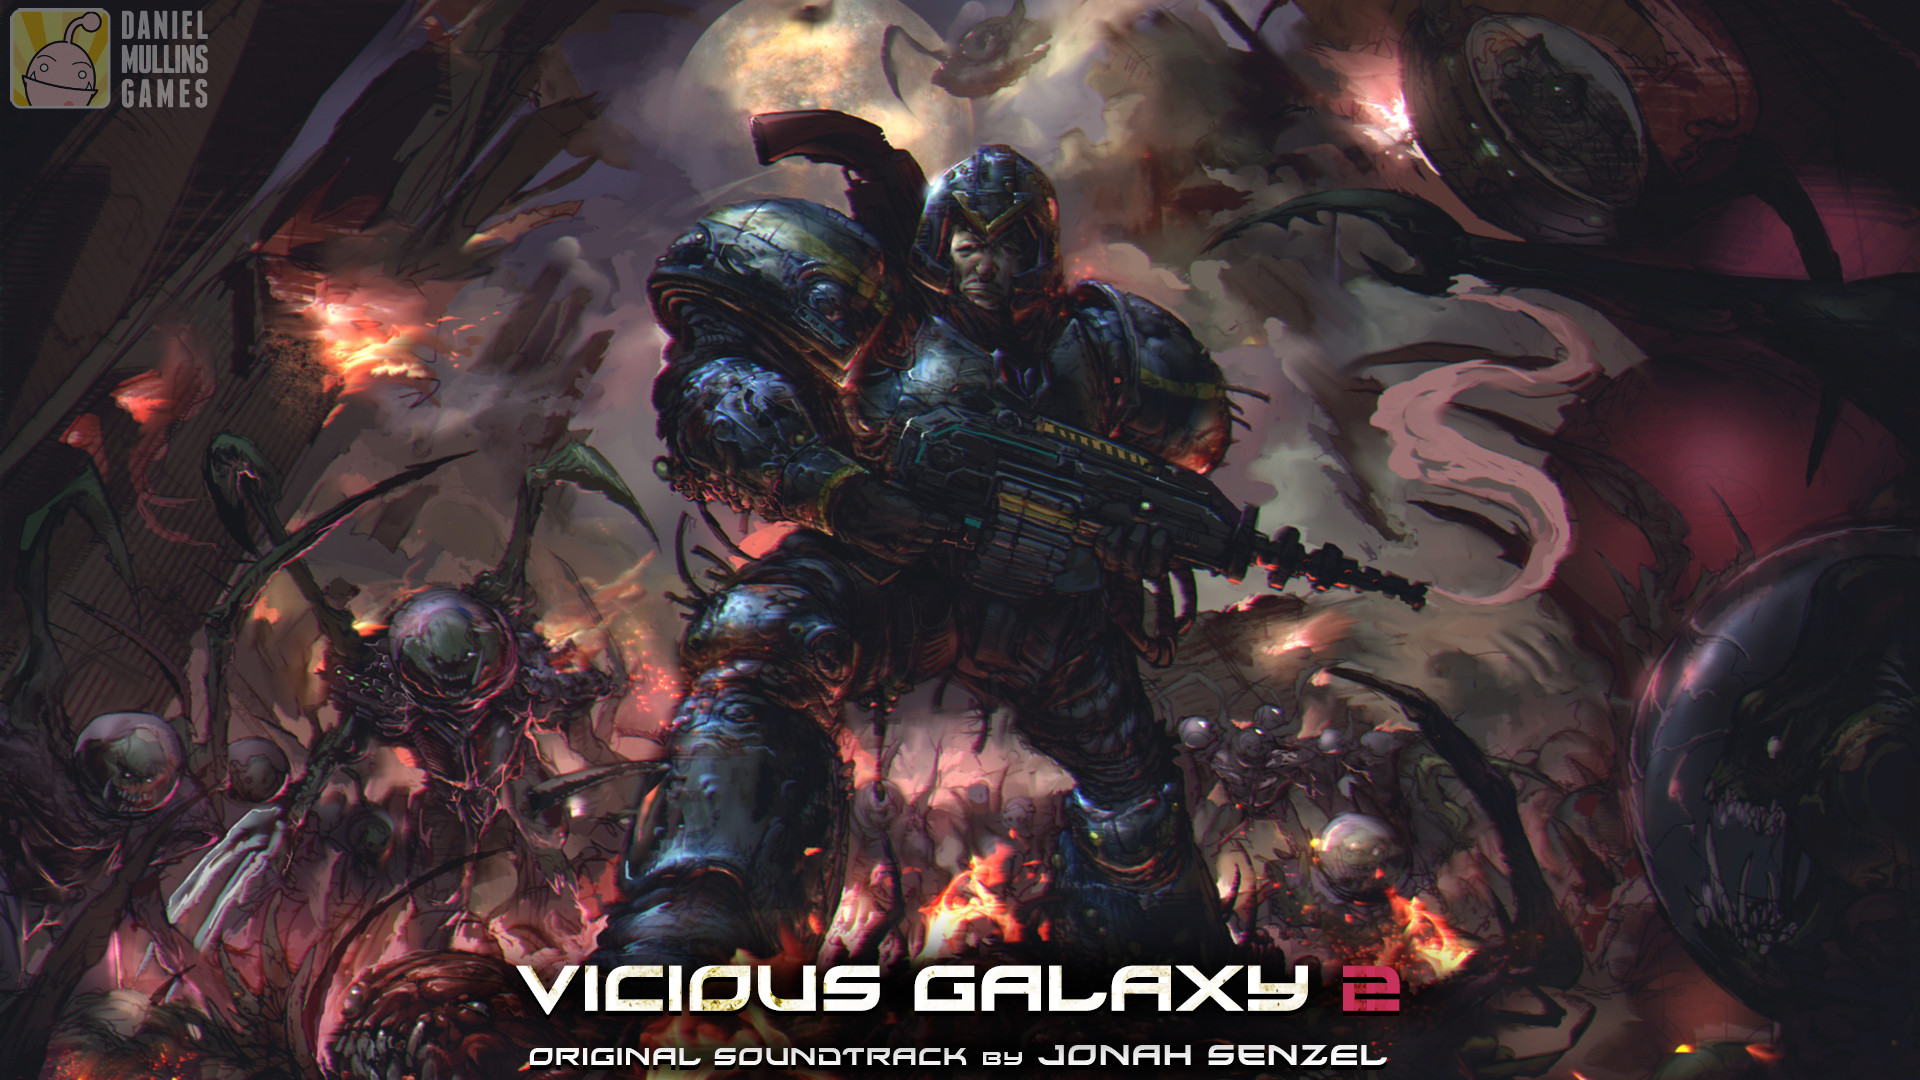 The Hex - "Vicious Galaxy II" Original Soundtrack Featured Screenshot #1